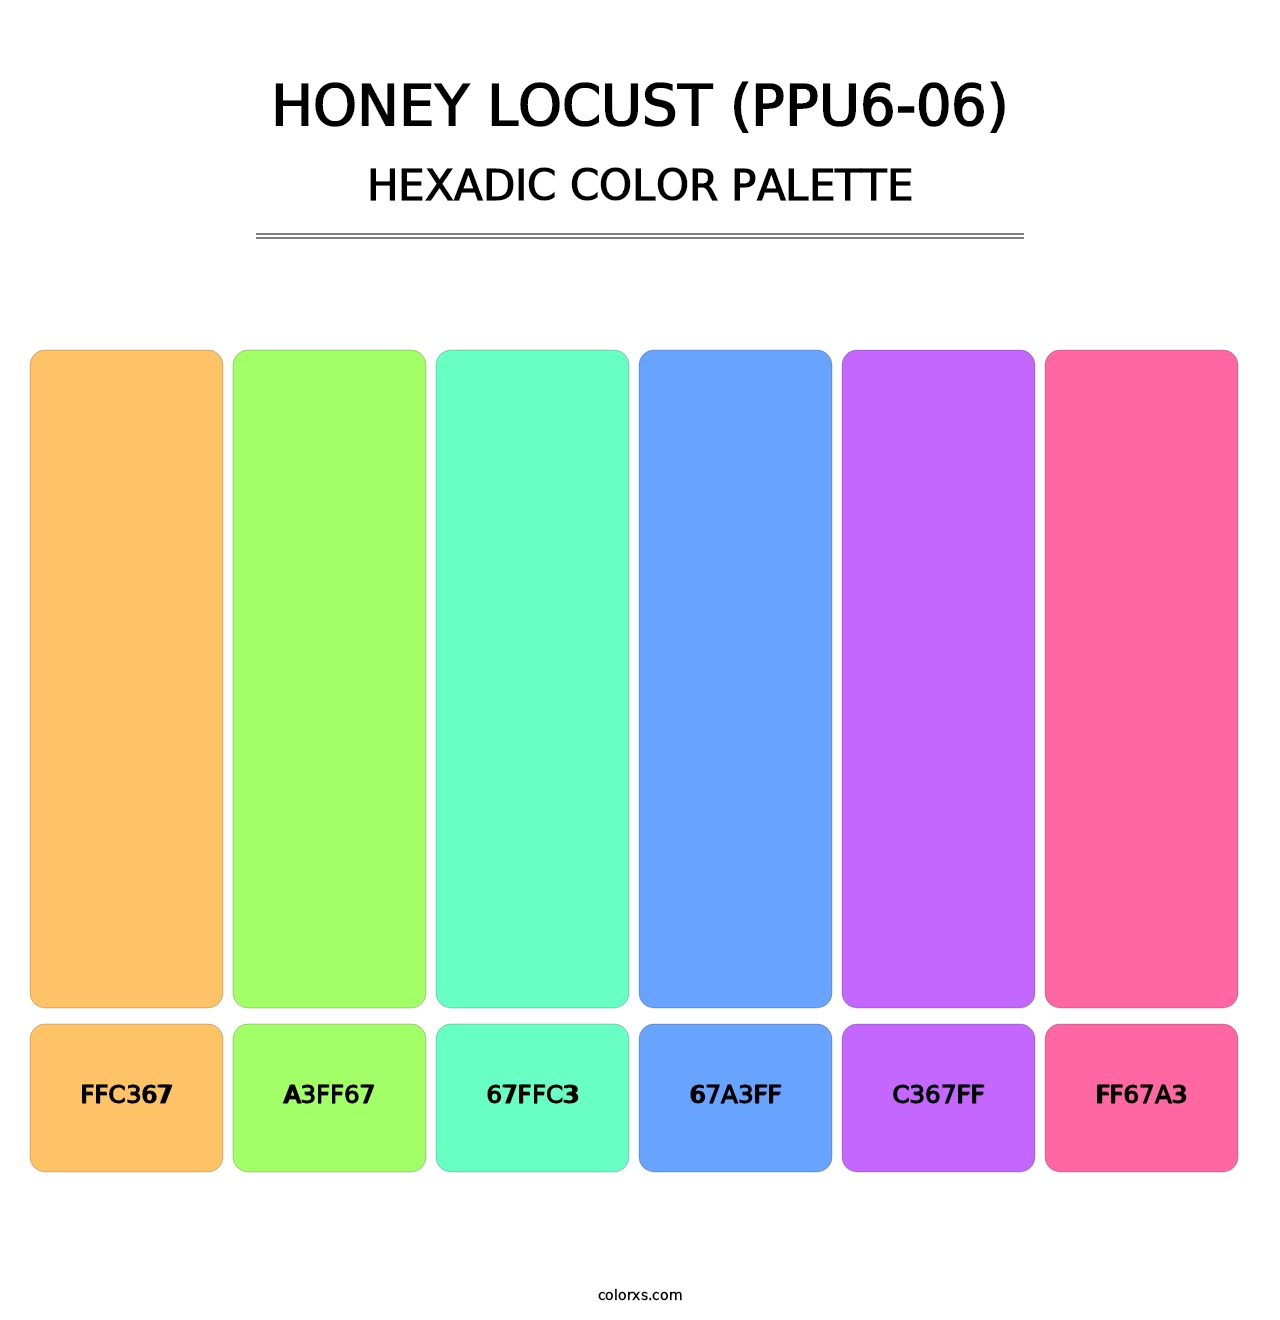 Honey Locust (PPU6-06) - Hexadic Color Palette